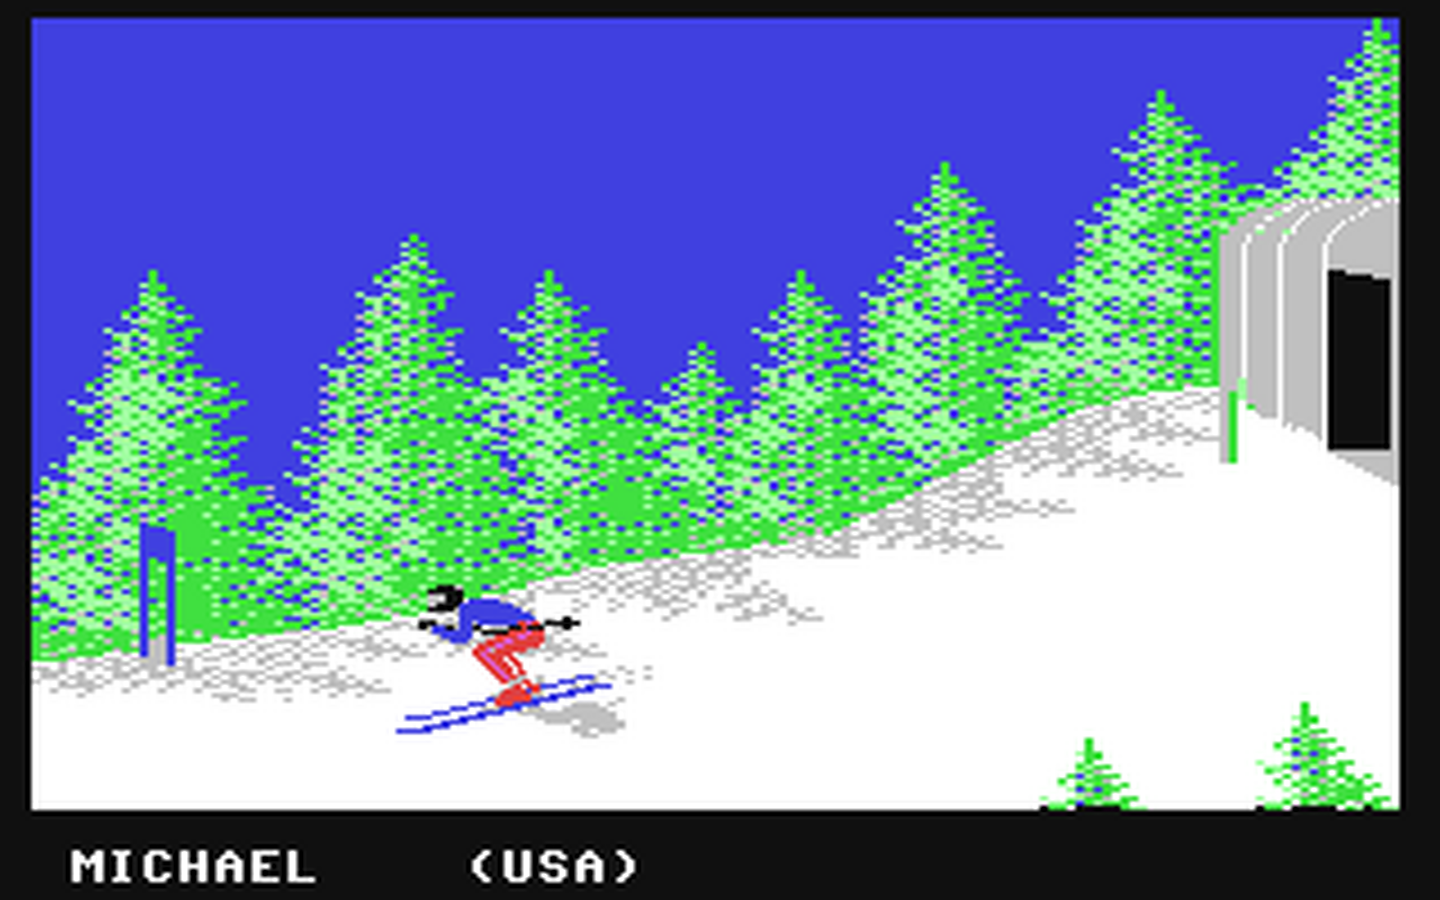 C64 GameBase Games,_The_-_Winter_Edition Epyx 1988